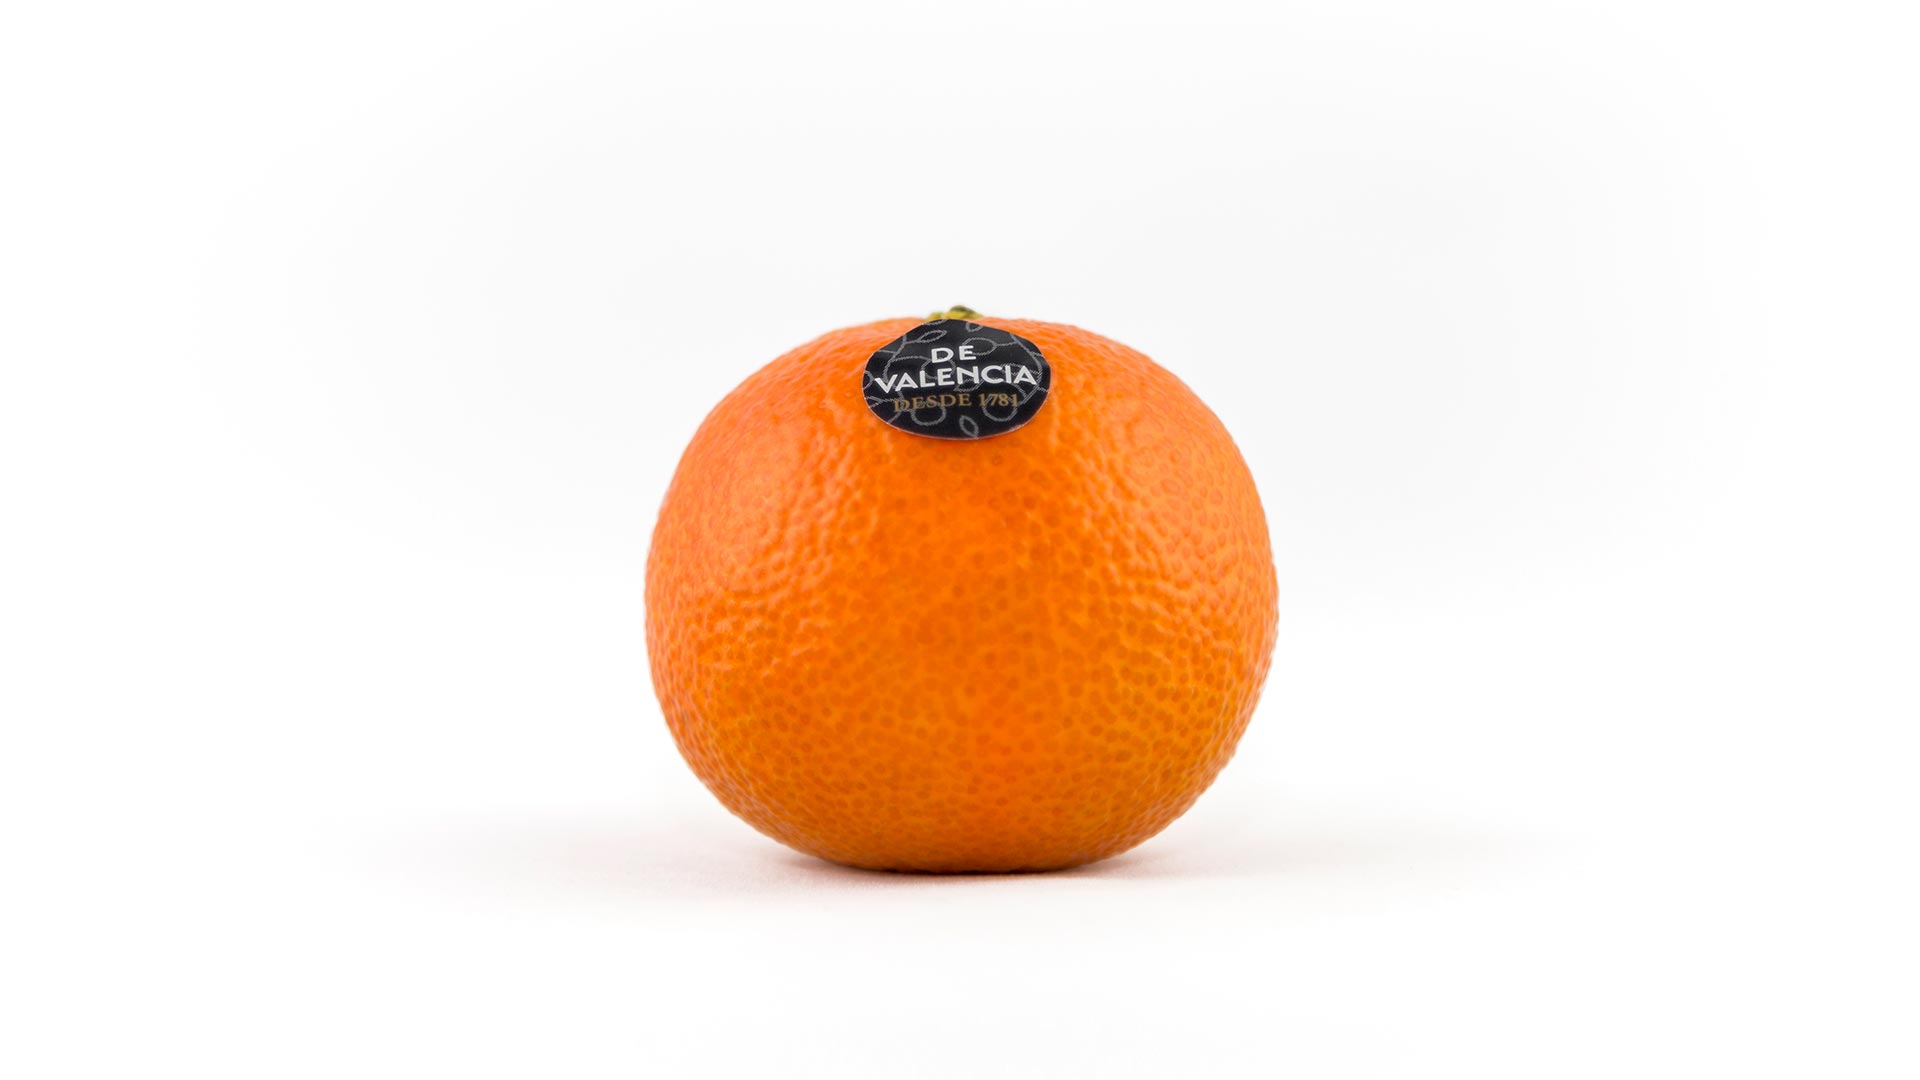 la meilleure orange du monde